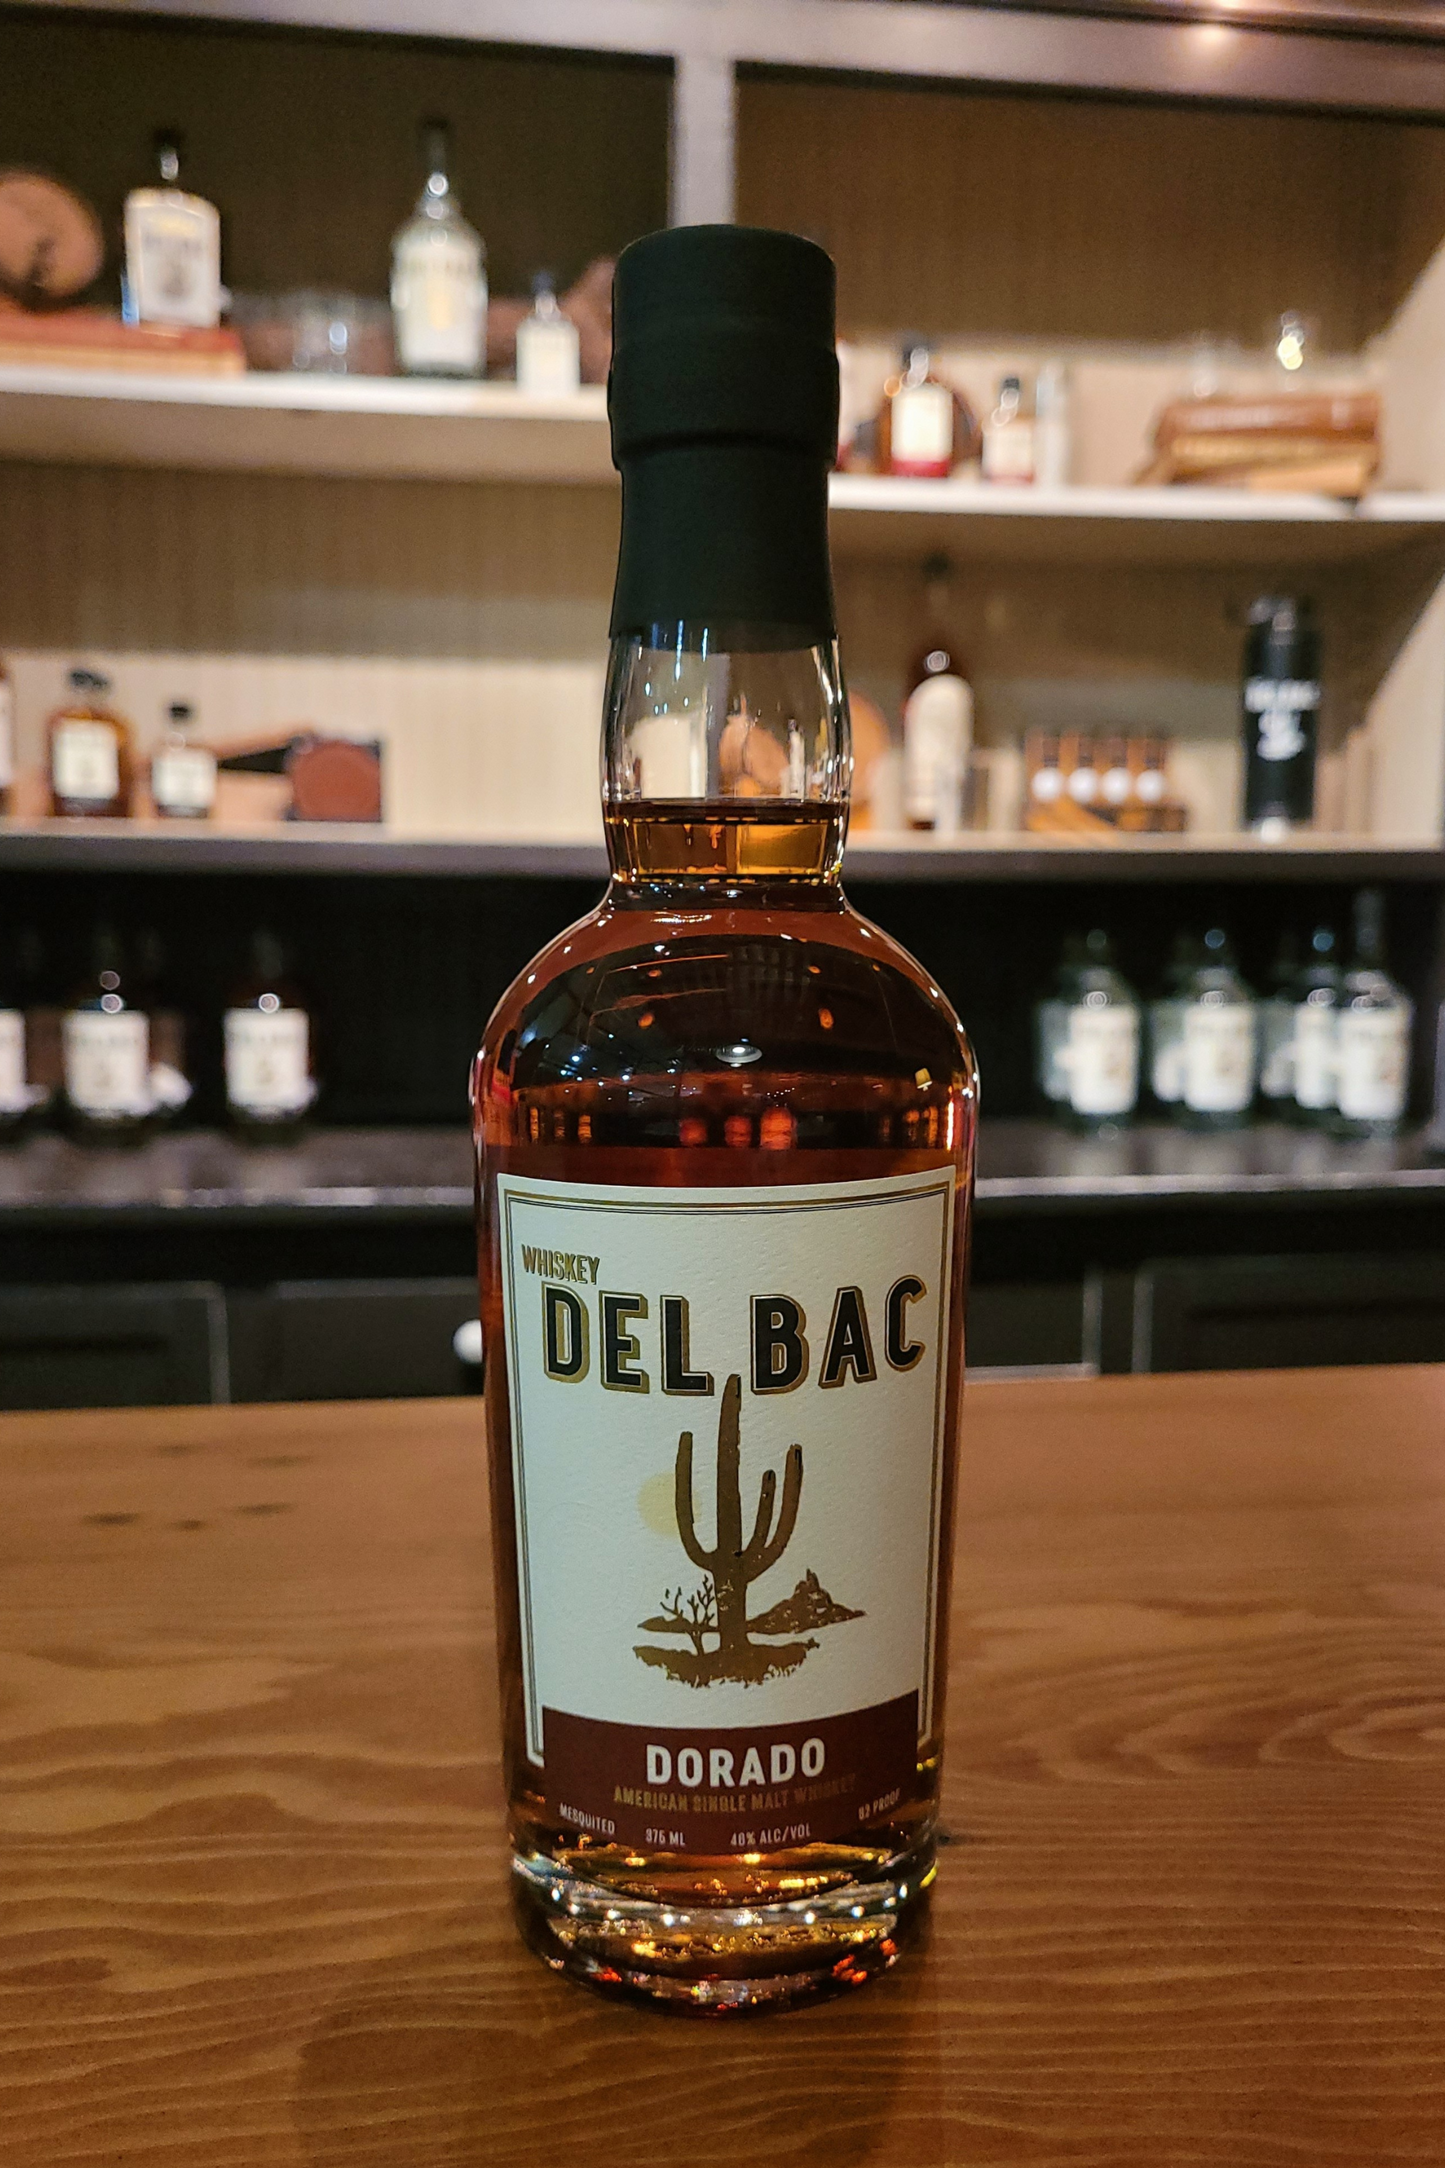 Whiskey Del Bac's Dorado bottle in 375 ML